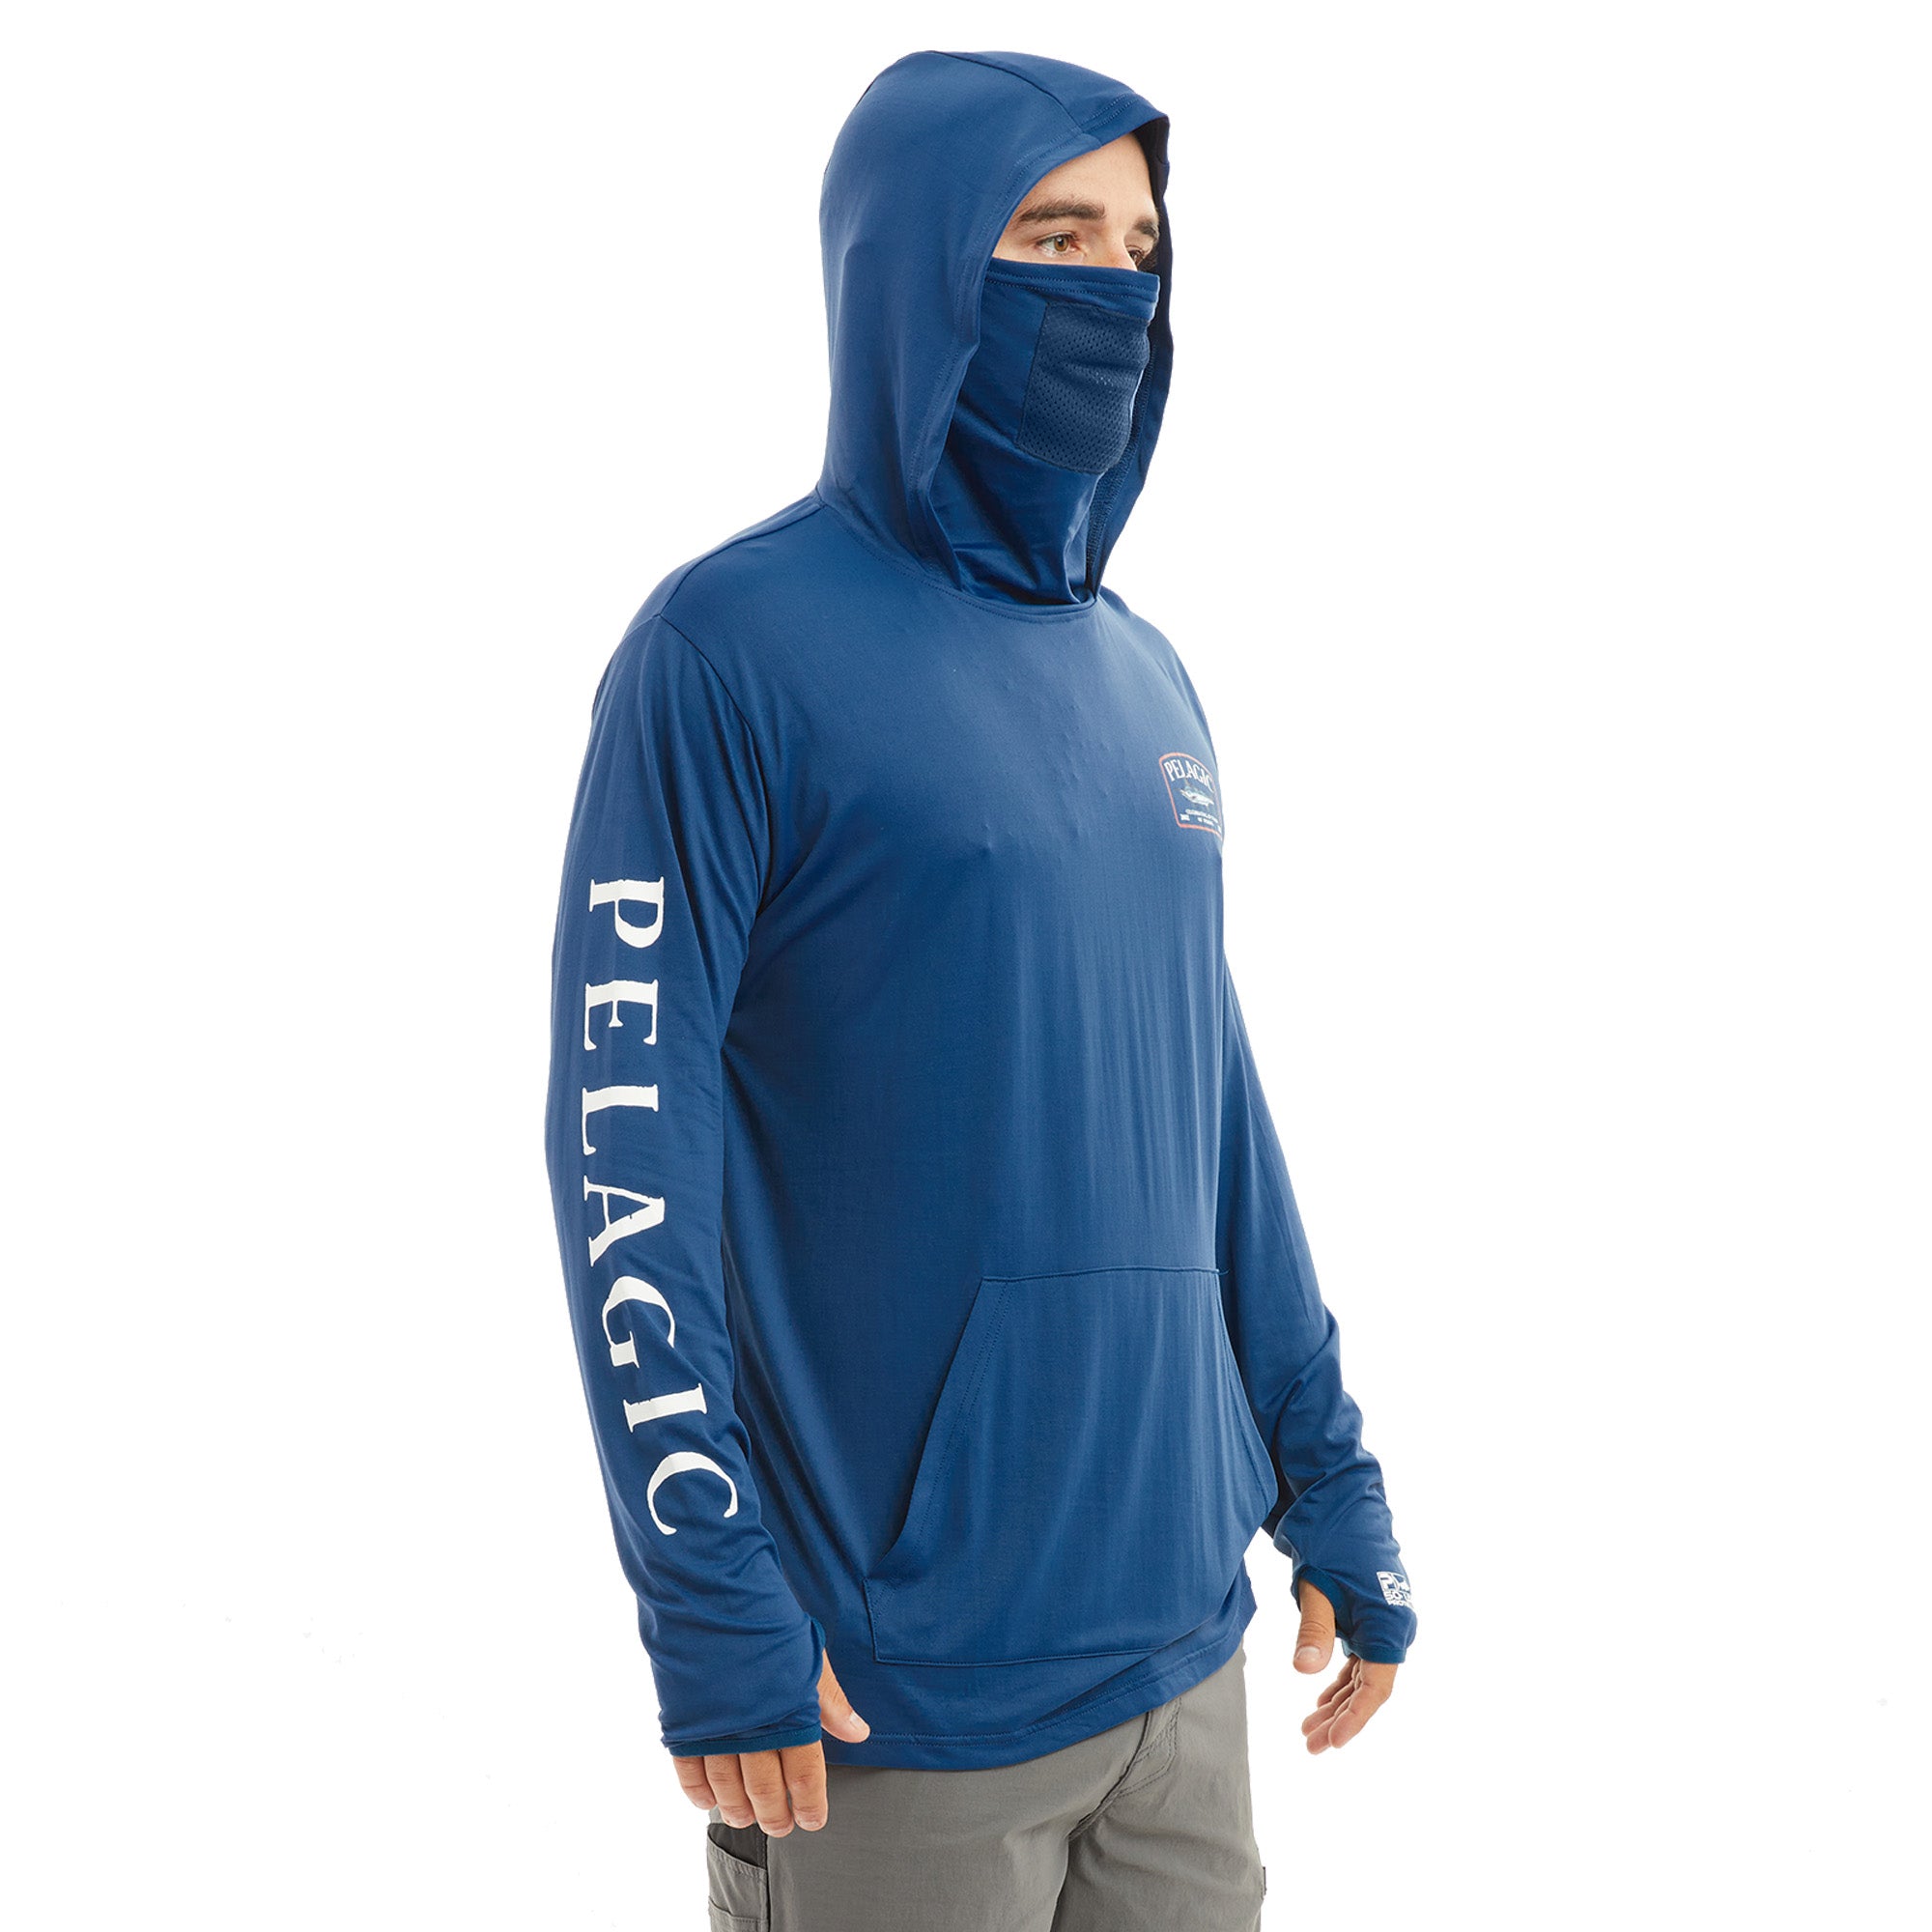 Pelagic Defcon Long-Sleeve Fishing Hoodie for Men - Smoke Blue - XL